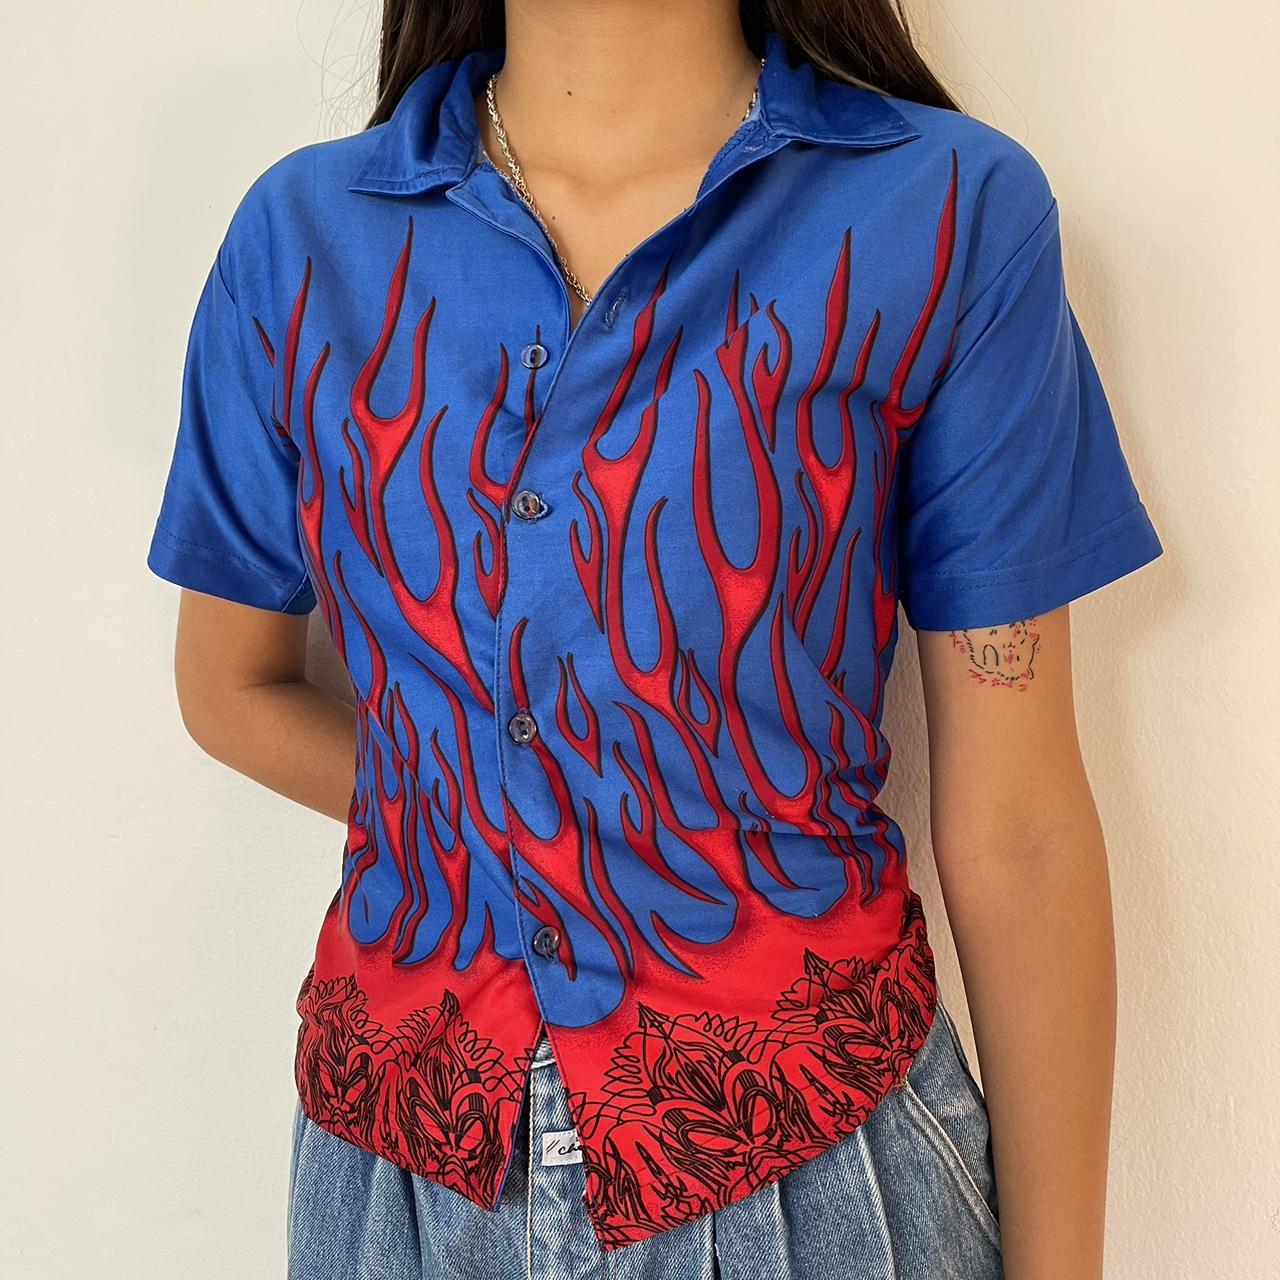 90's No boundaries fire shirt /tribal Y2k shirt Tag - Depop